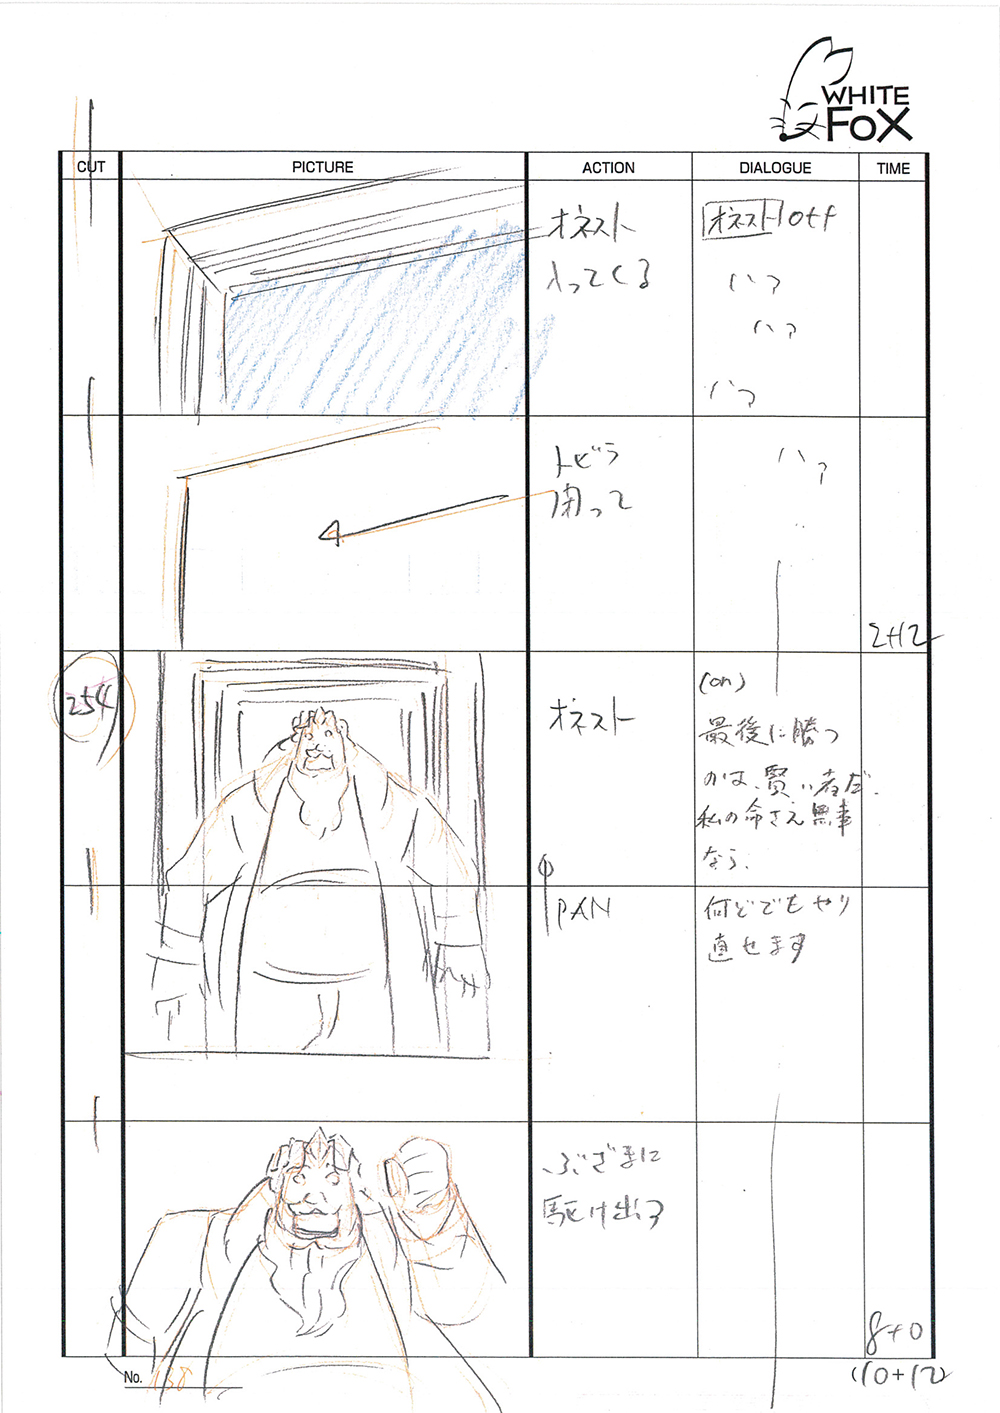 Akame ga Kill Episode 24 Storyboard Leak 143